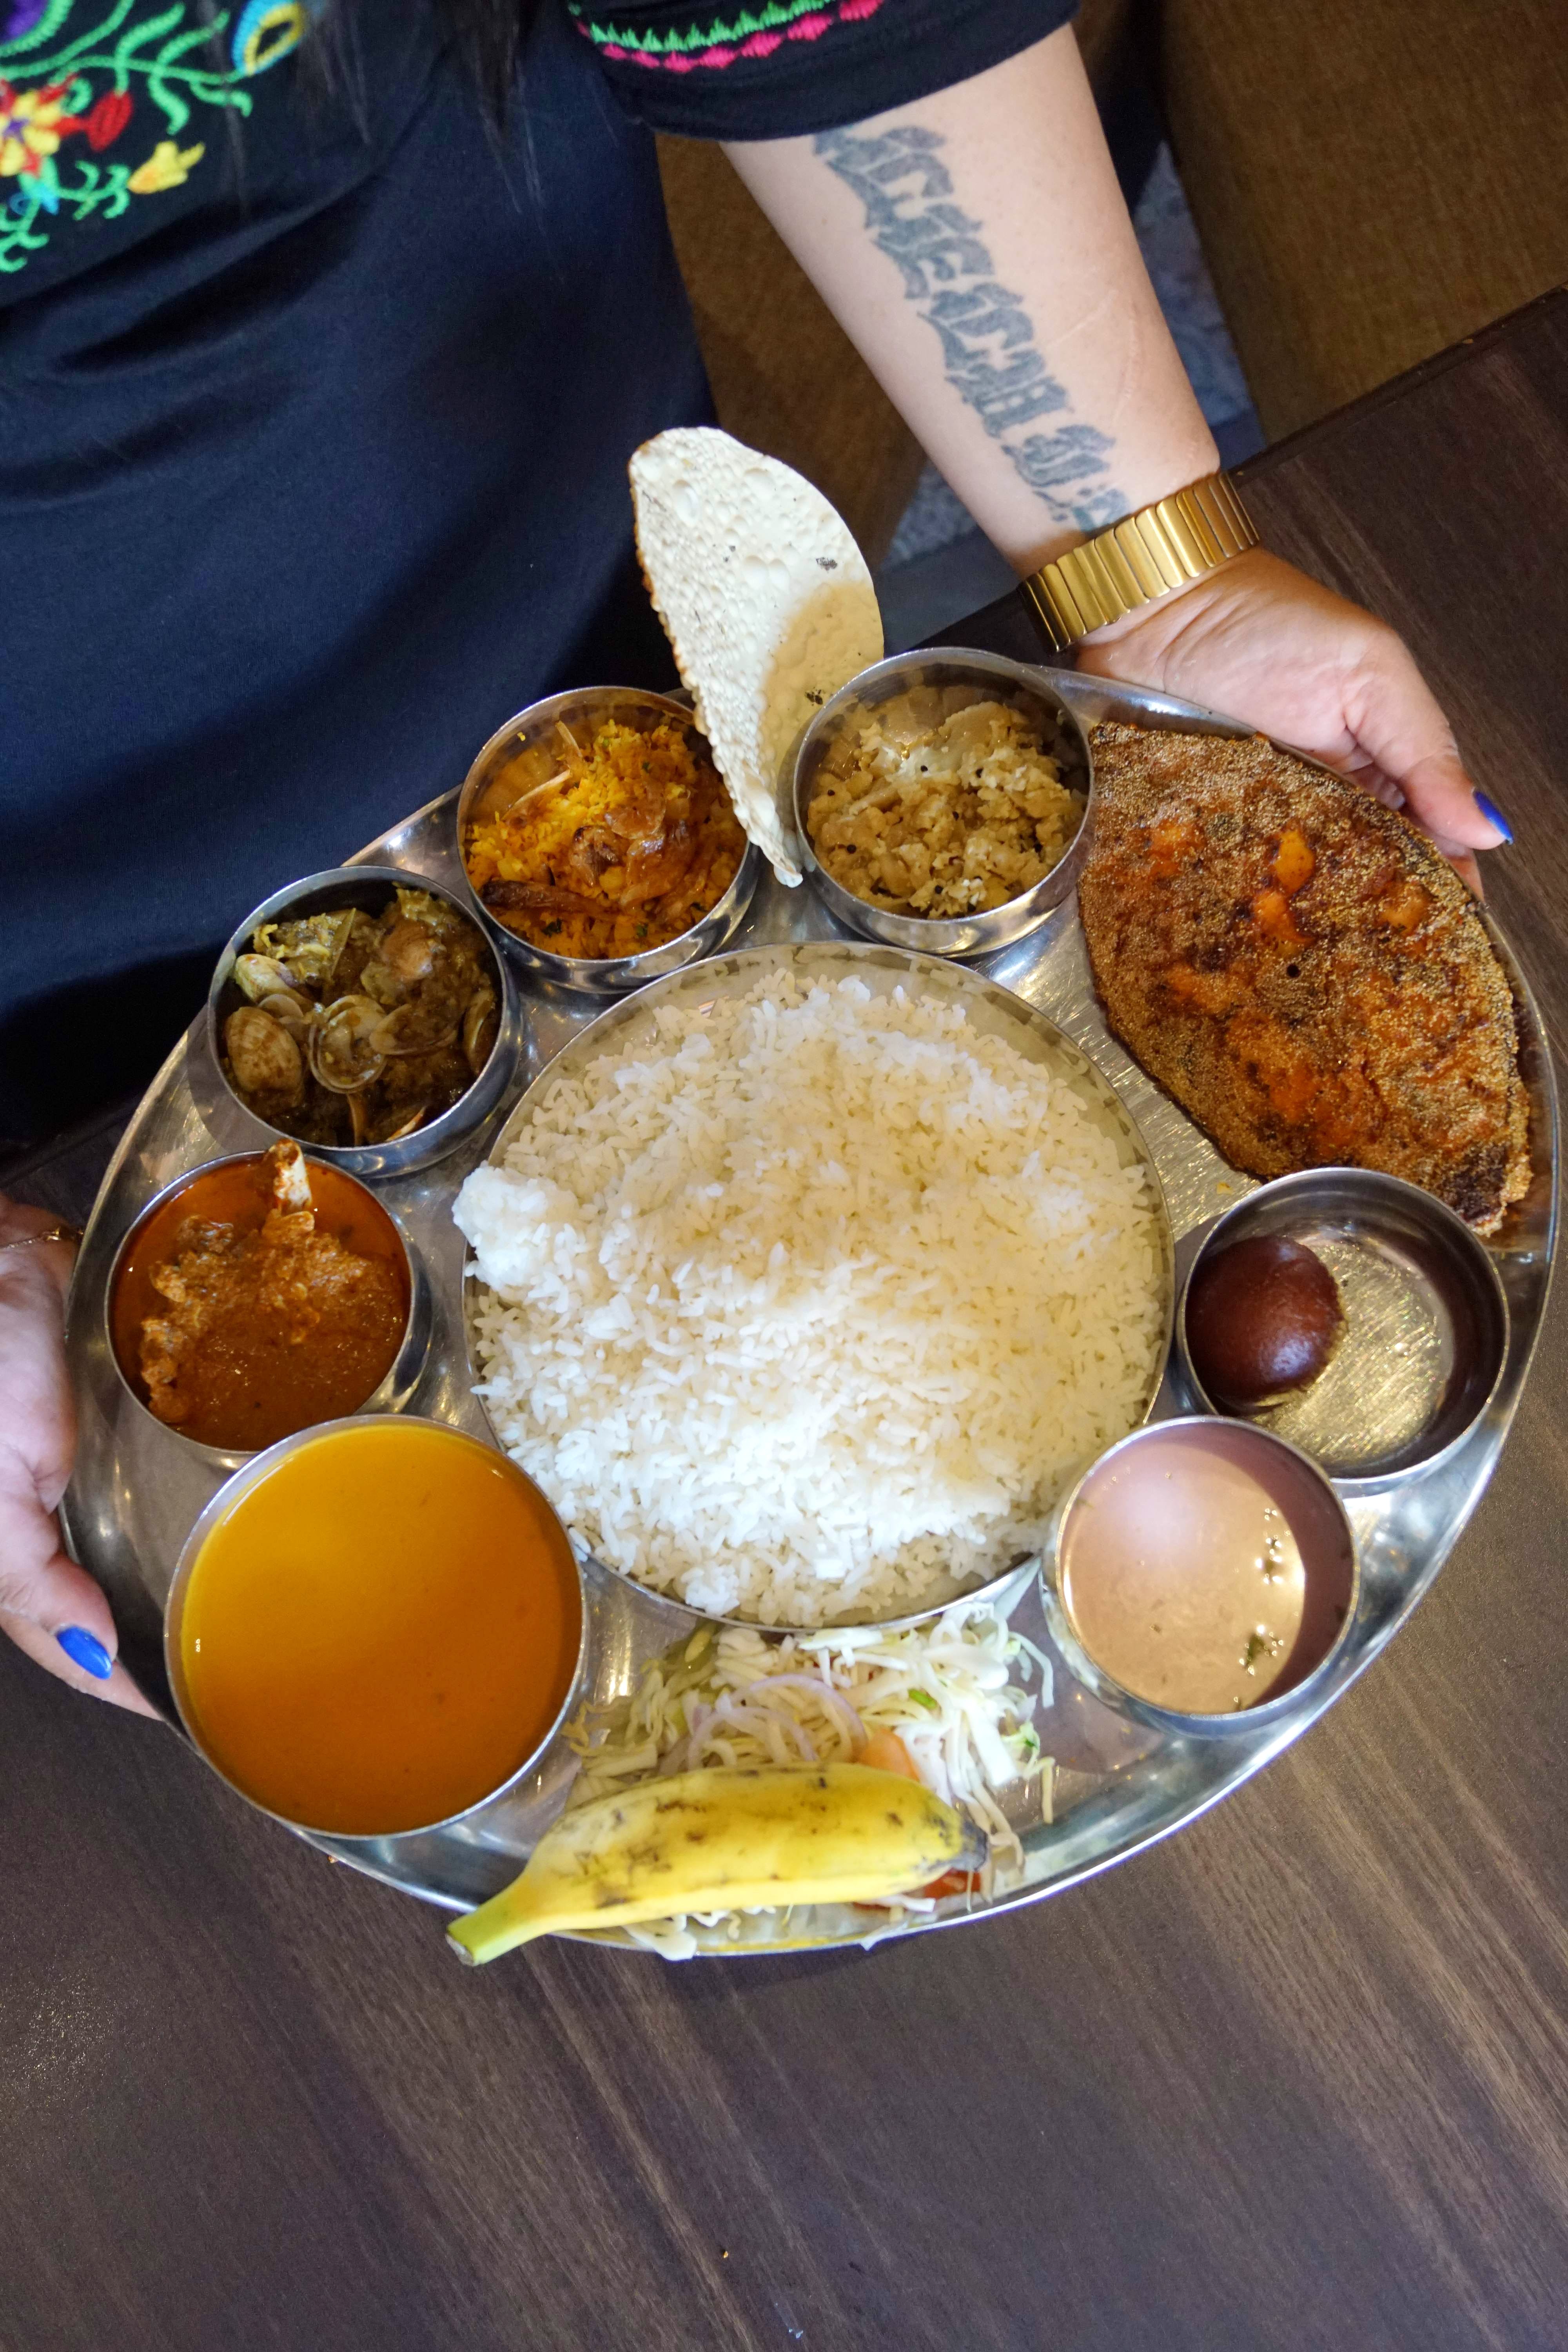 Food,Cuisine,Dish,Meal,Ingredient,Breakfast,Indian cuisine,Vegetarian food,Full breakfast,Rajasthani cuisine